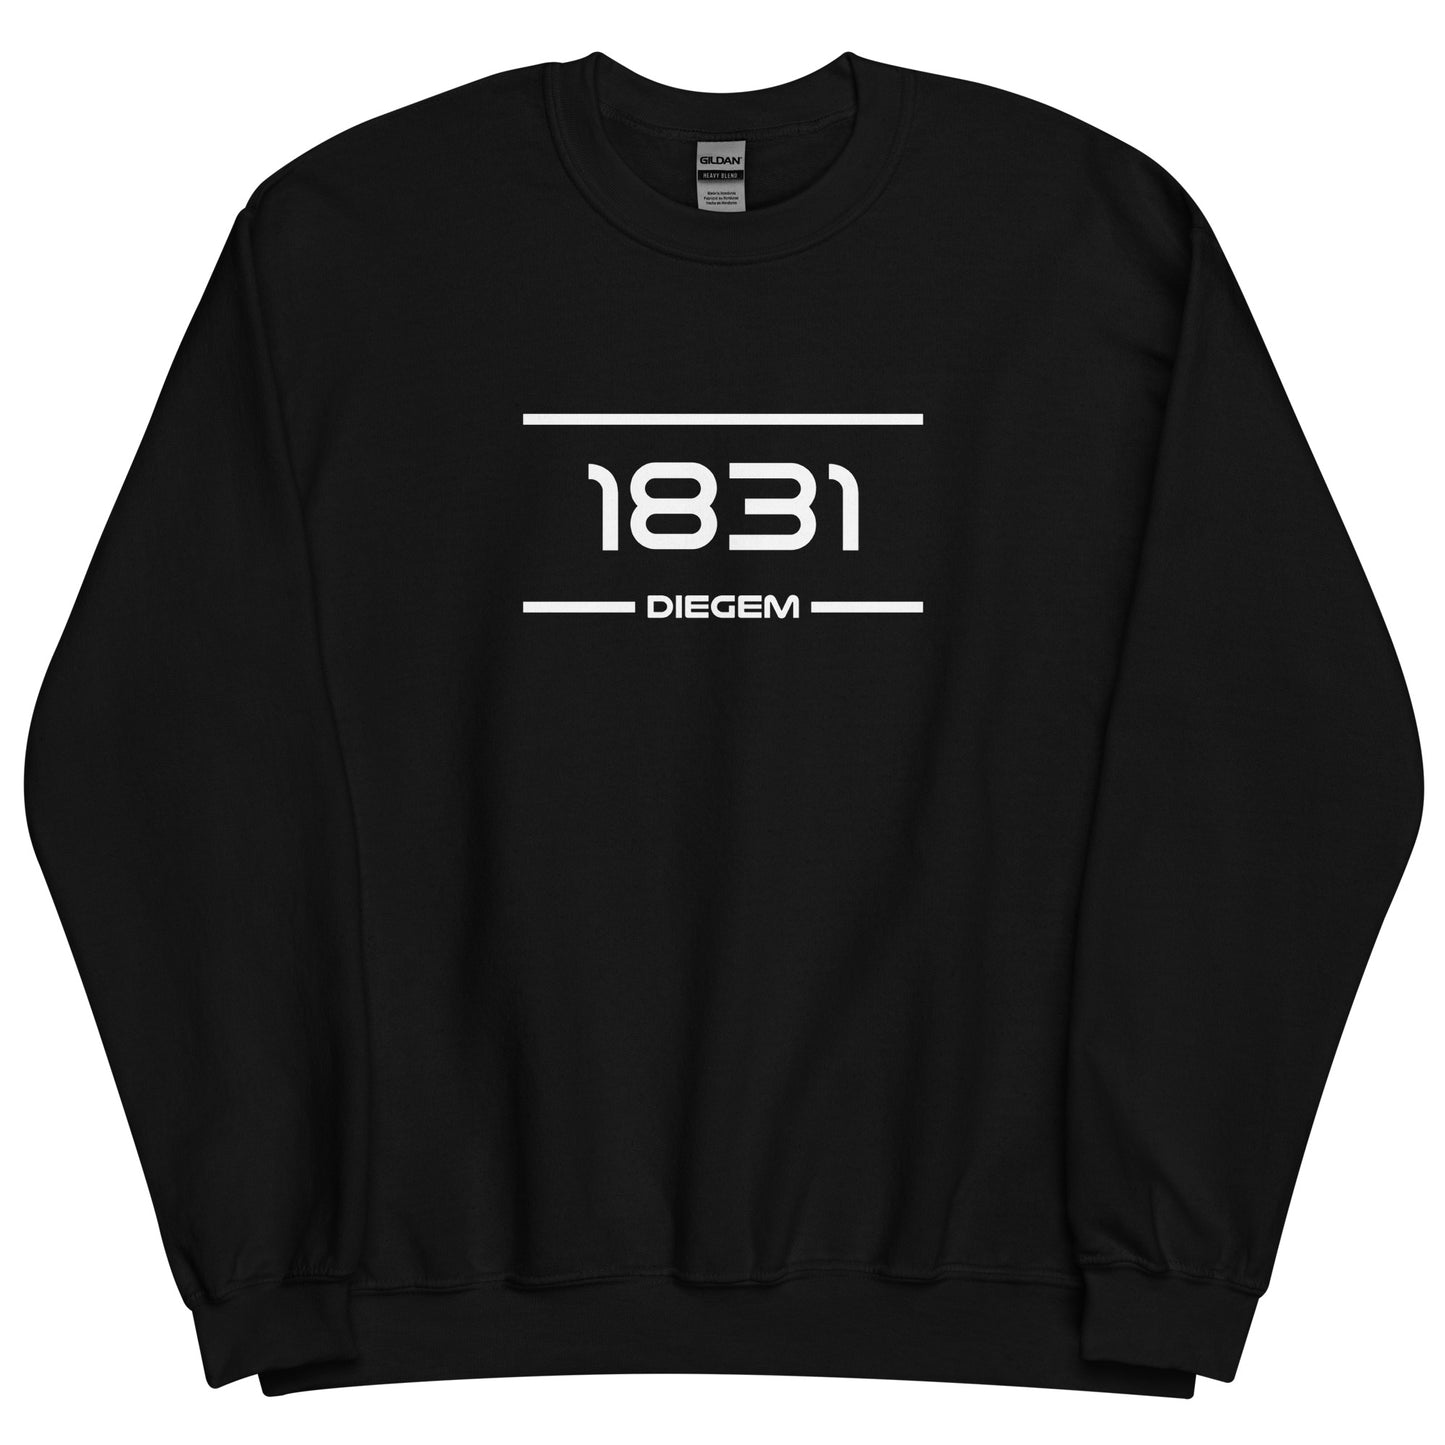 Sweater - 1831 - Diegem (M/V)